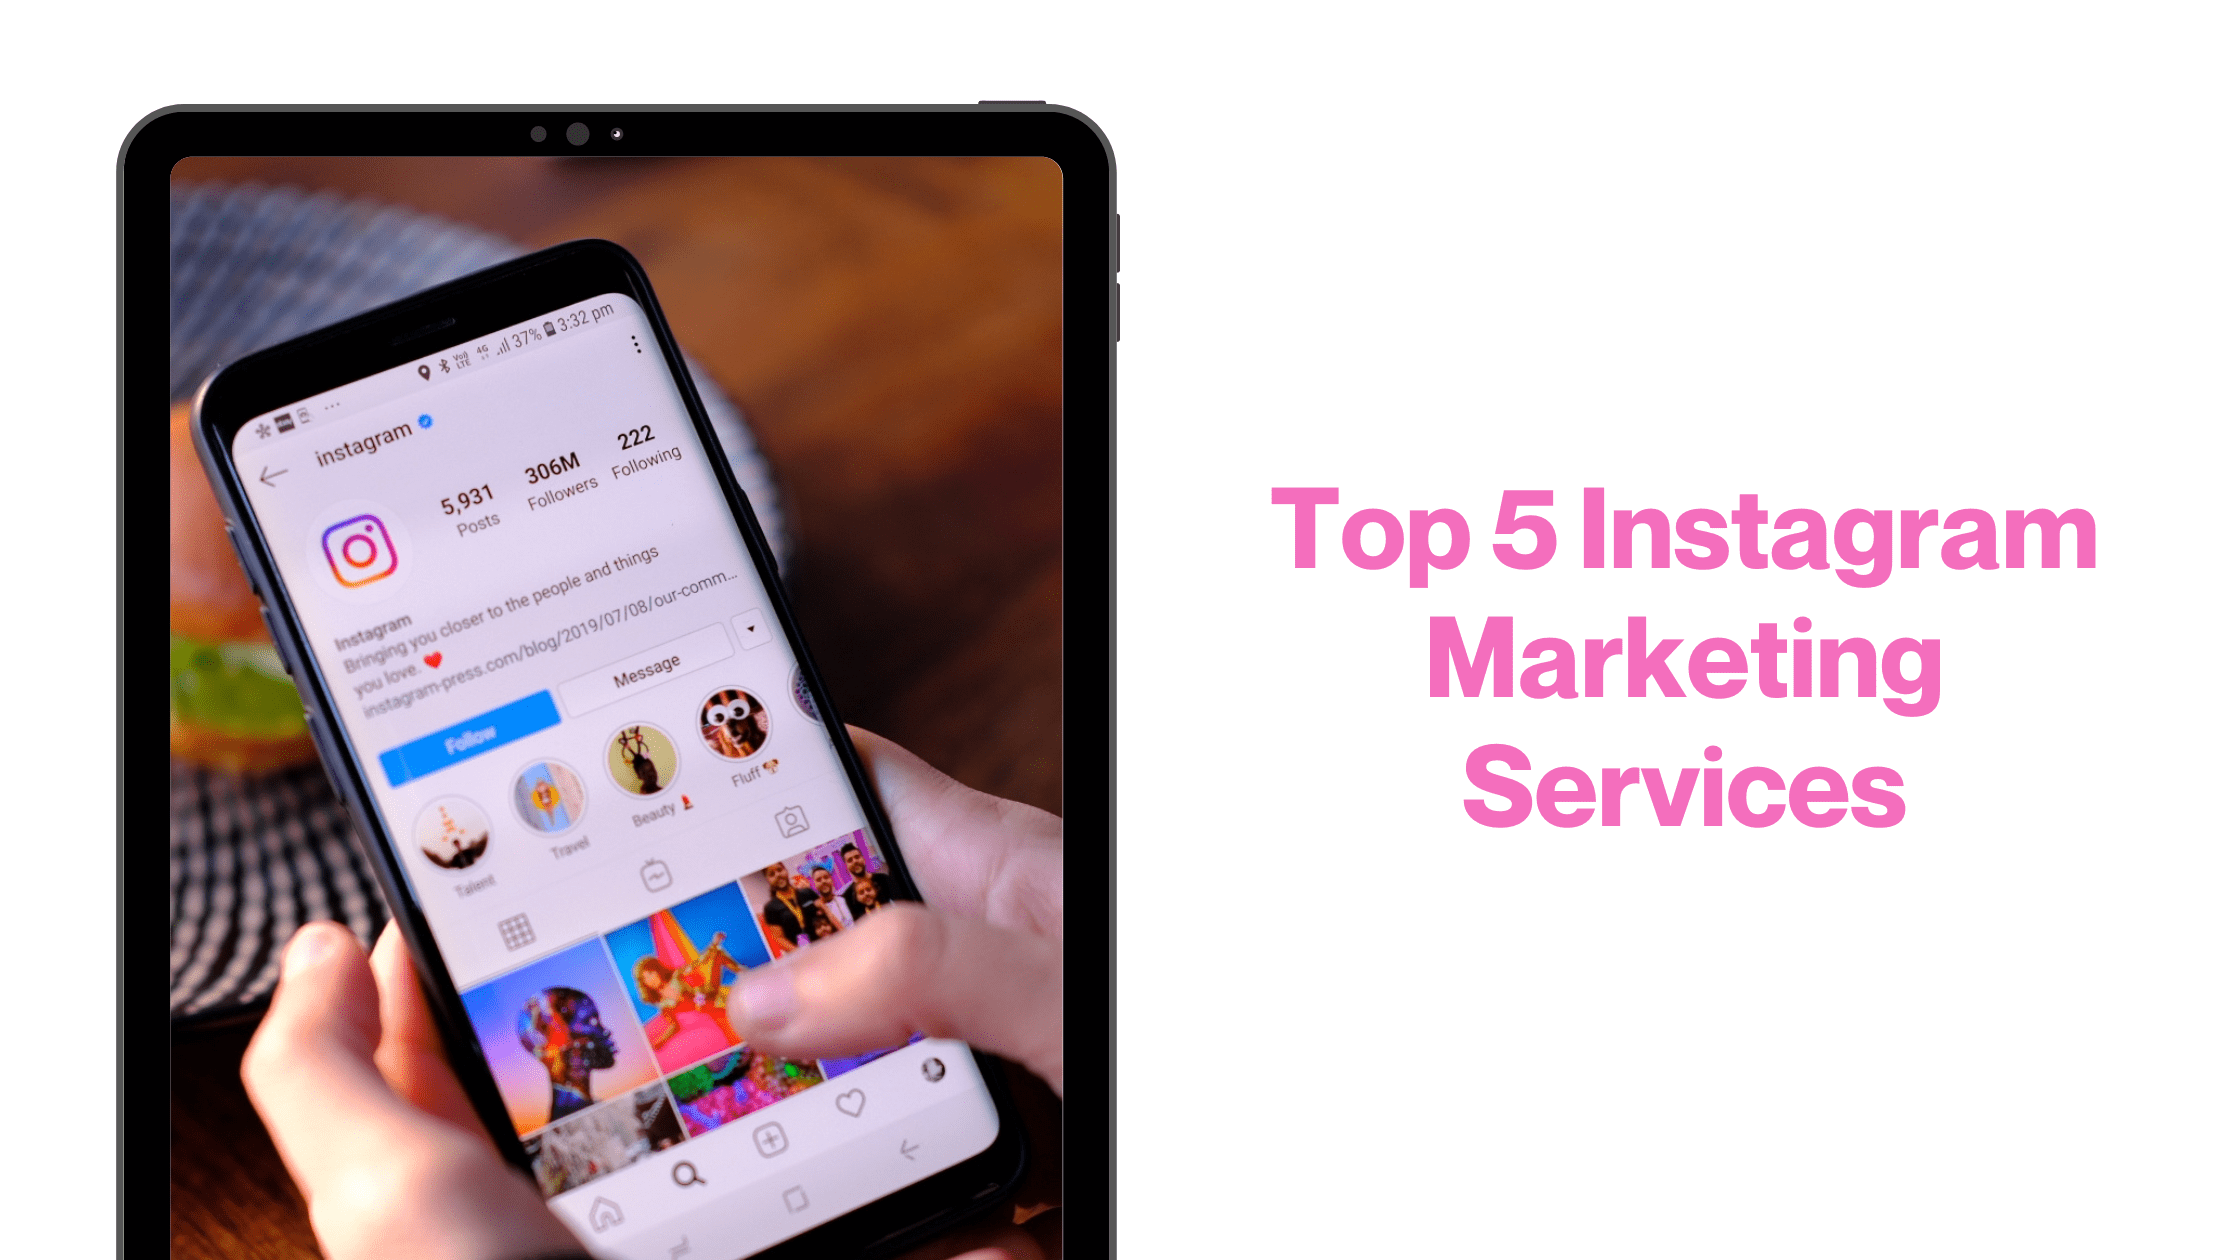 Top 5 Instagram Marketing Services